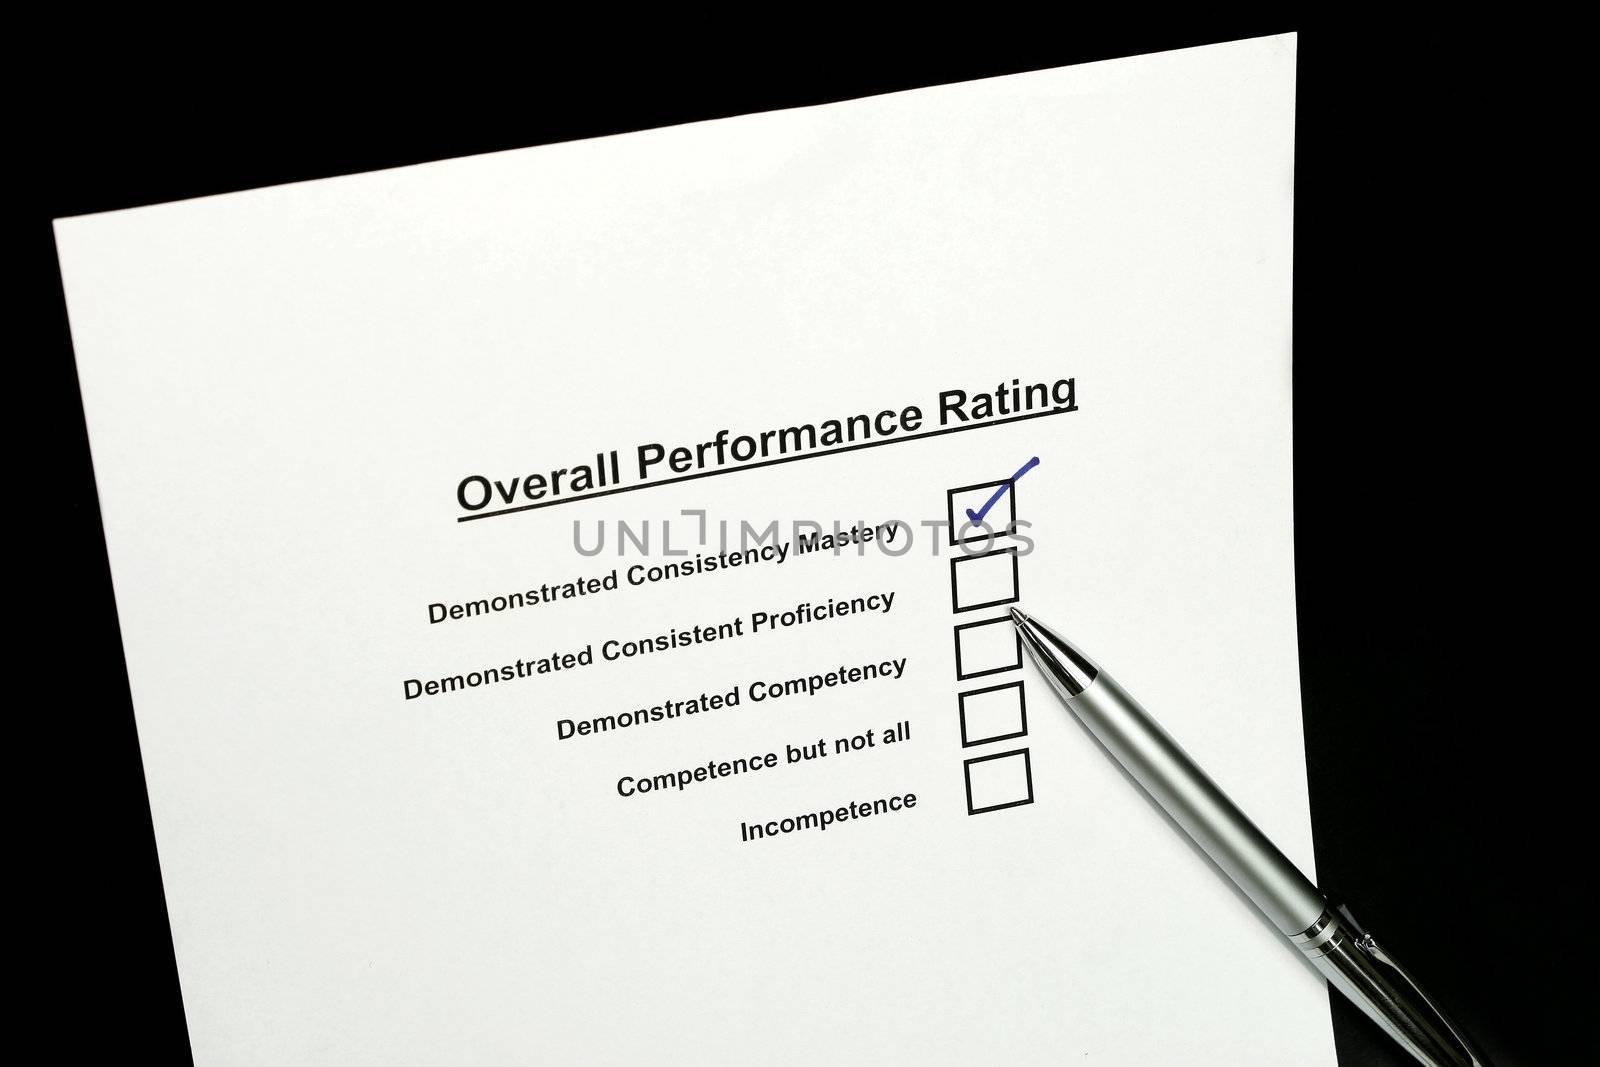 Overall performance rating by sacatani